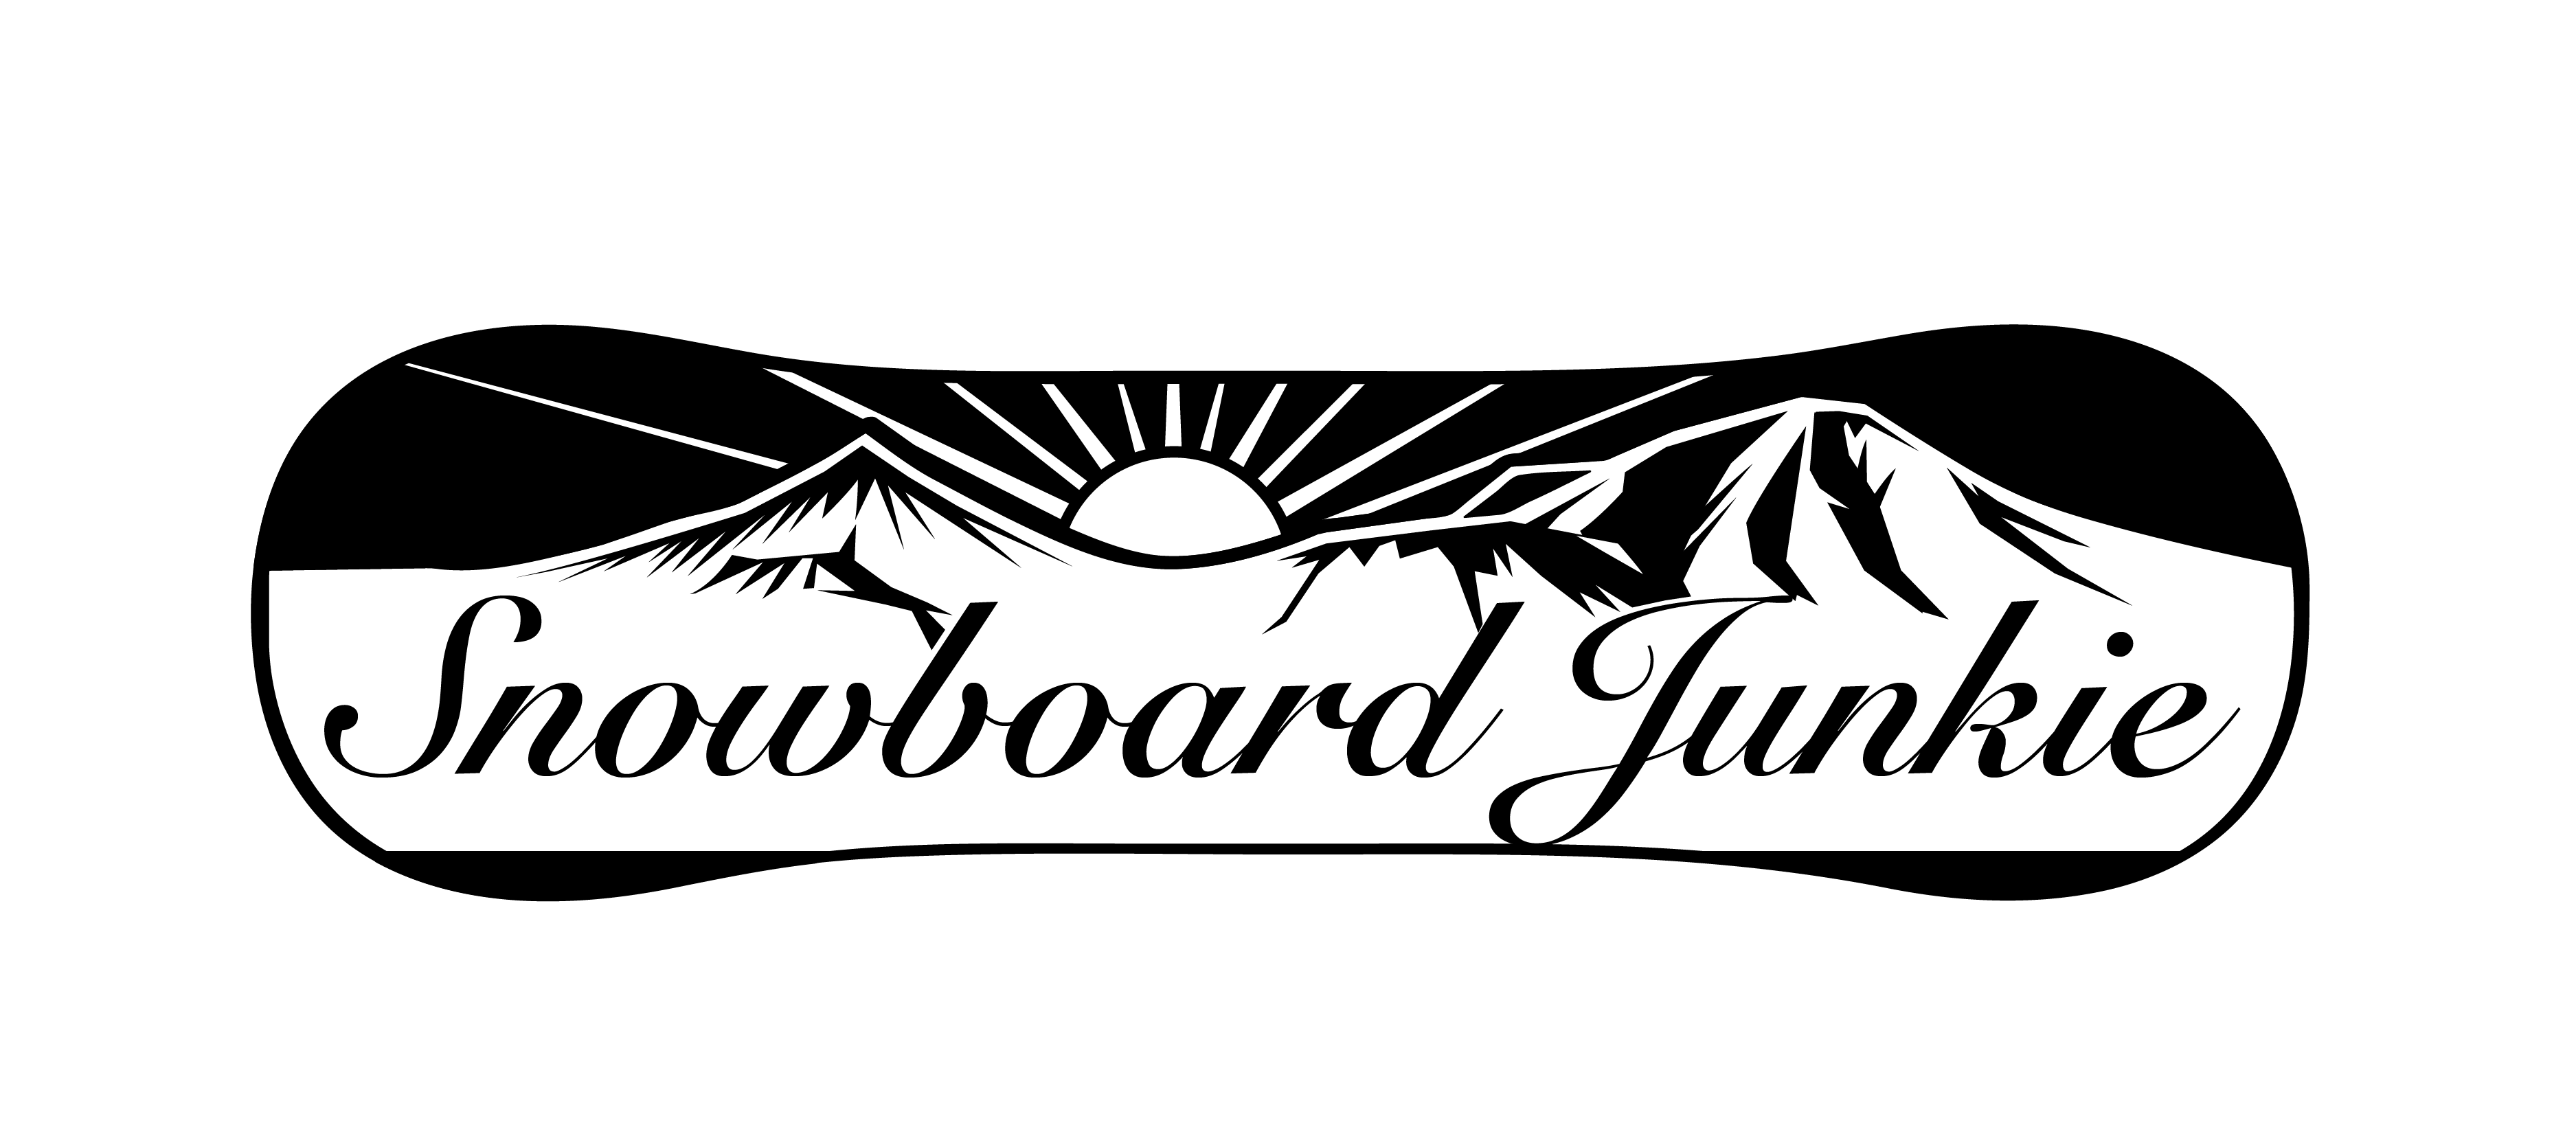 Snowboard Junkie Logo